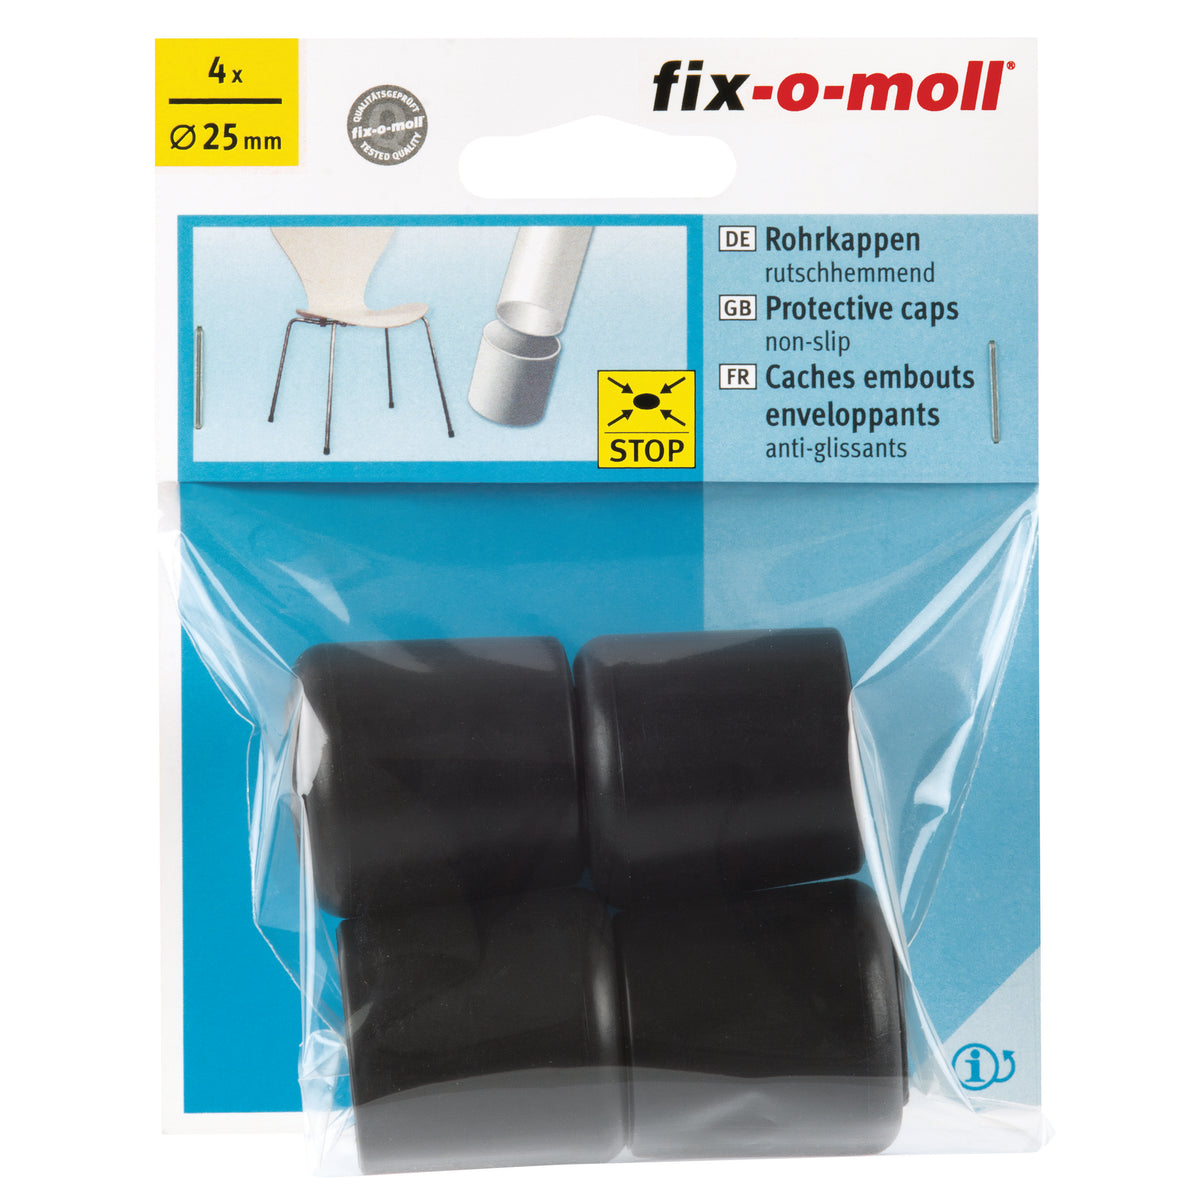 Fix-O-Moll anti-slip pootdoppen zwart 25mm 4 st